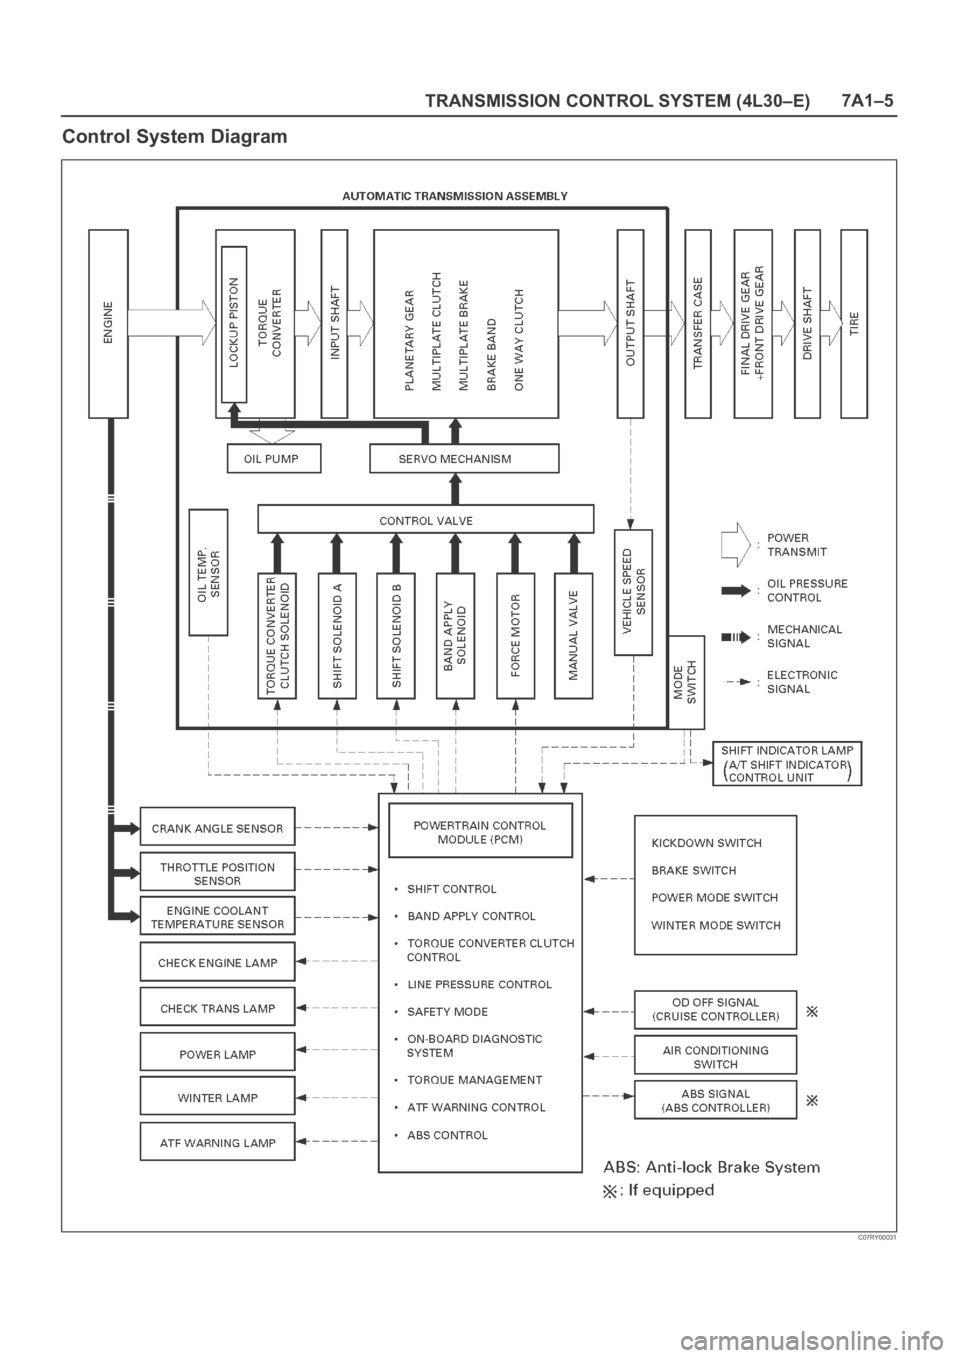 OPEL FRONTERA 1998  Workshop Manual TRANSMISSION CONTROL SYSTEM (4L30–E)7A1–5
Control System Diagram
C07RY00031 